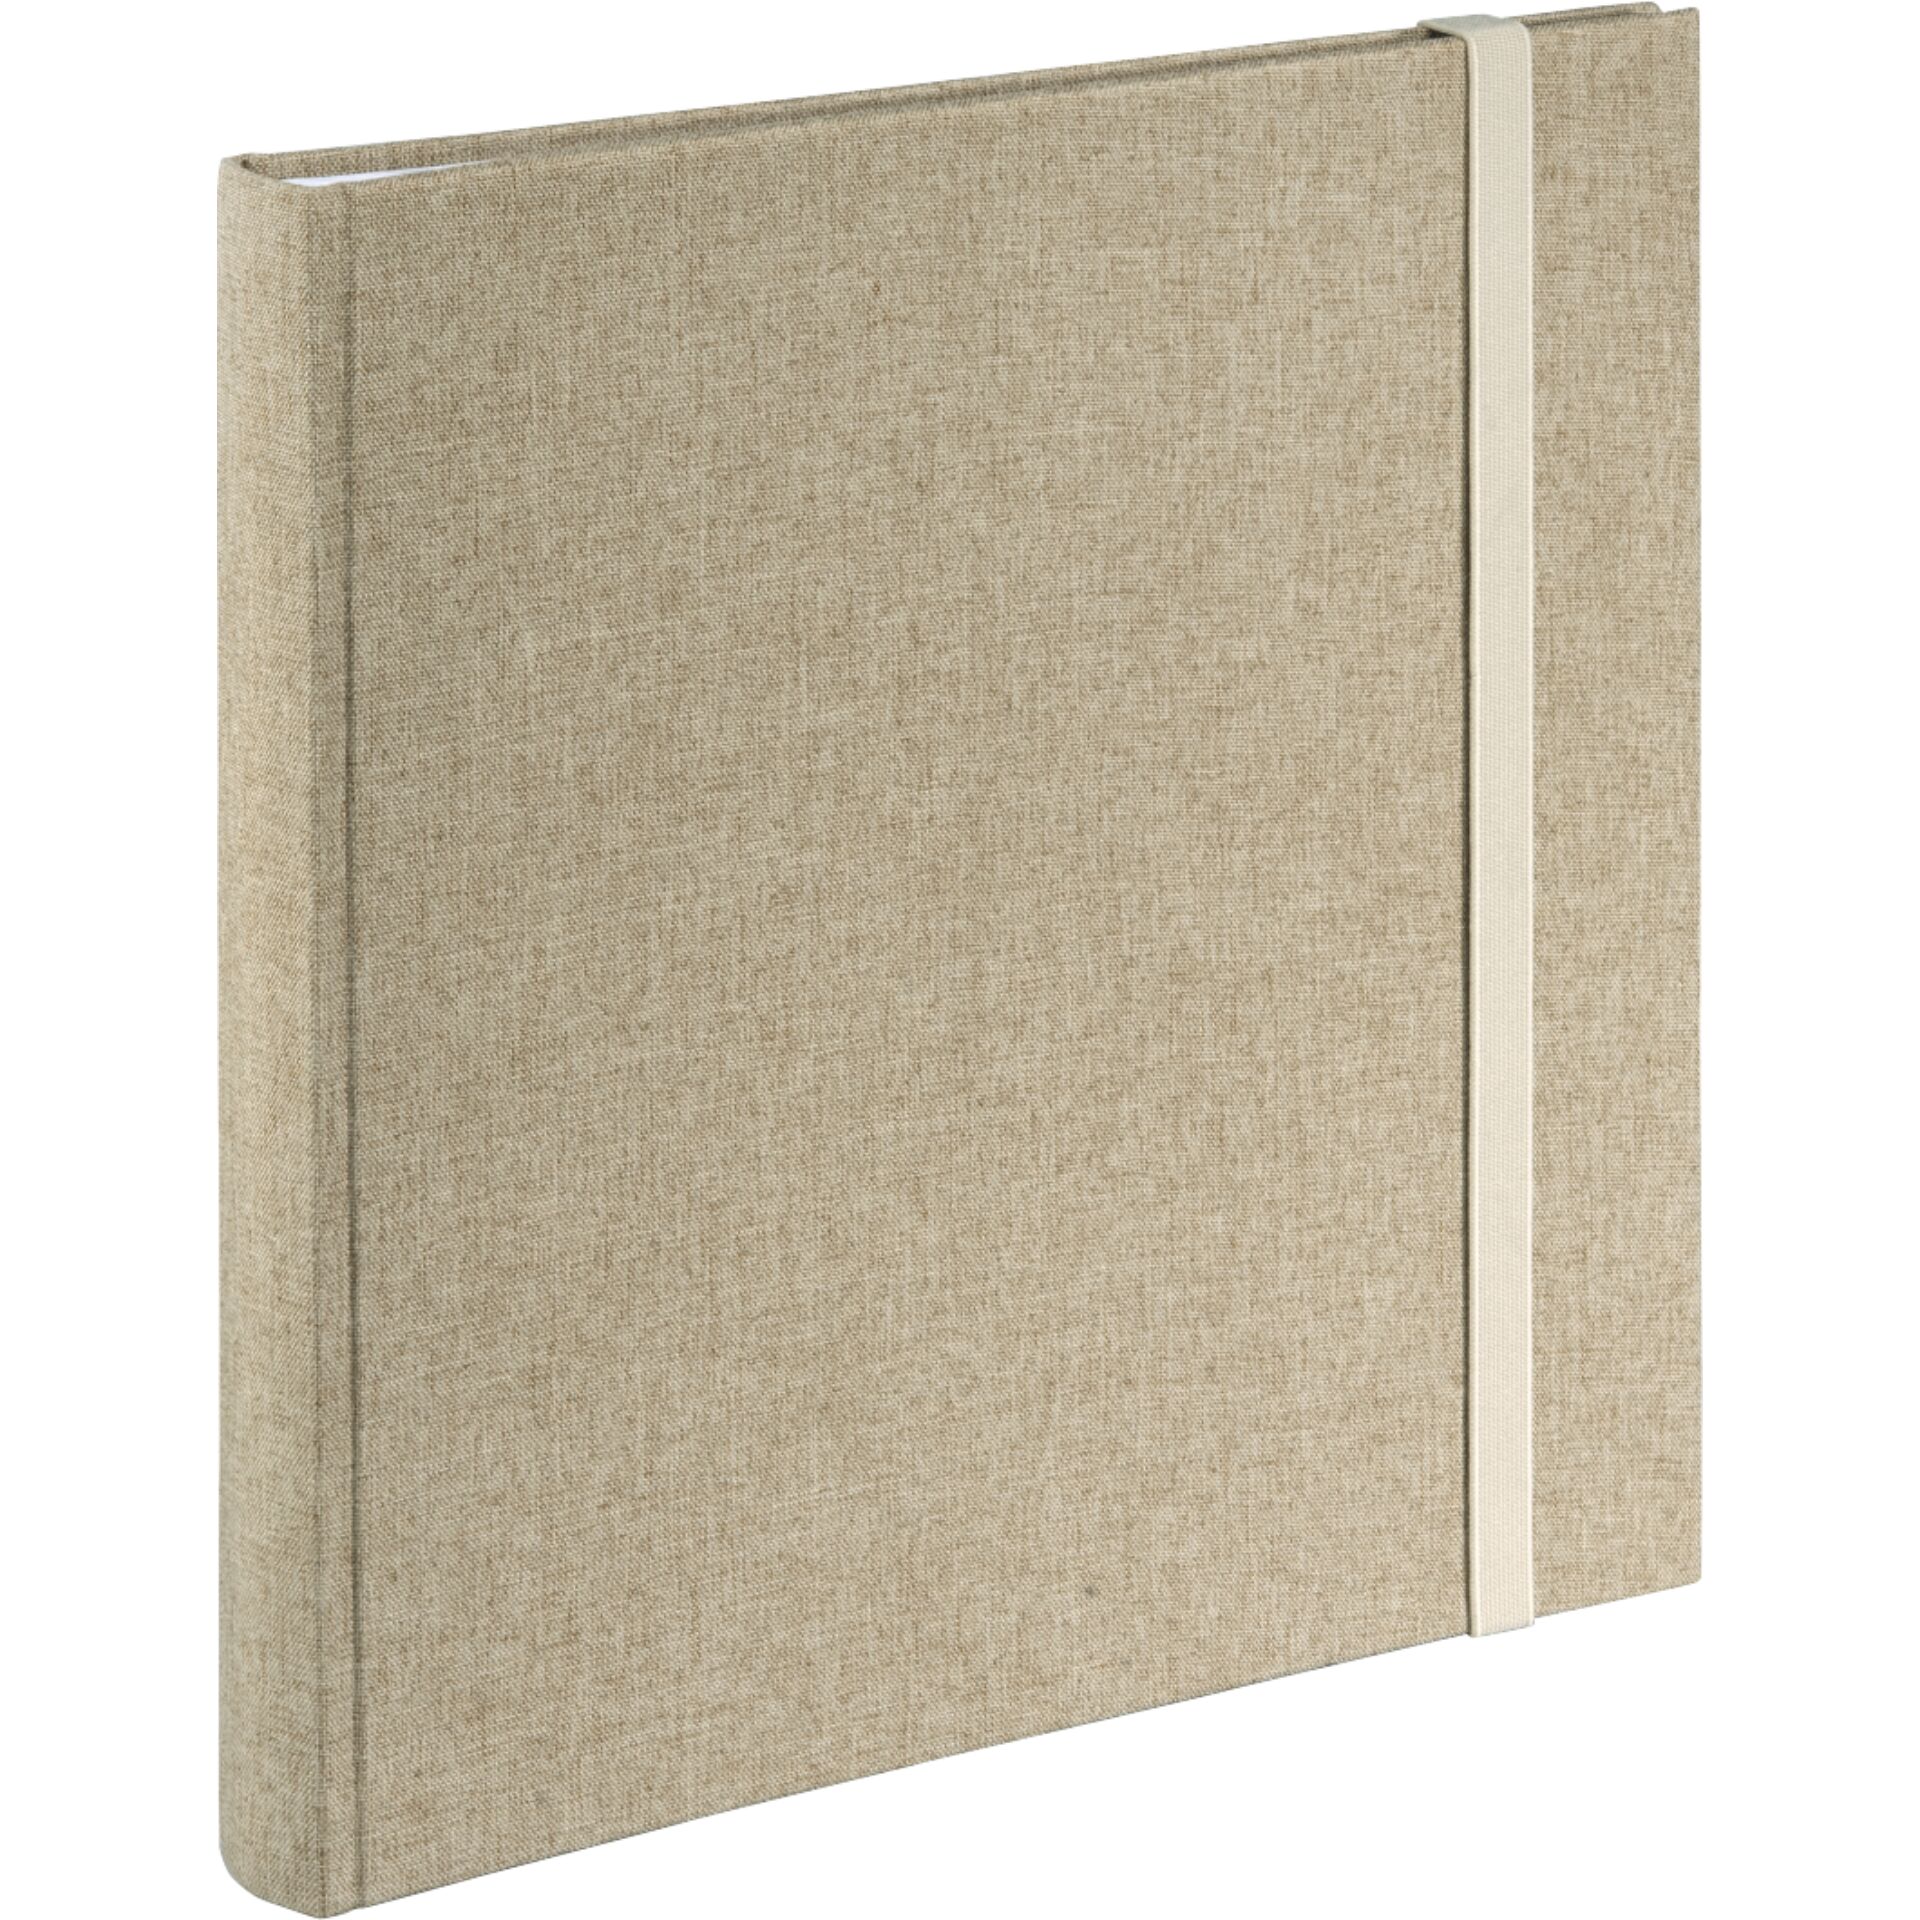 Hama Jumbo Tessuto beige 30x30 - 60 white Pages